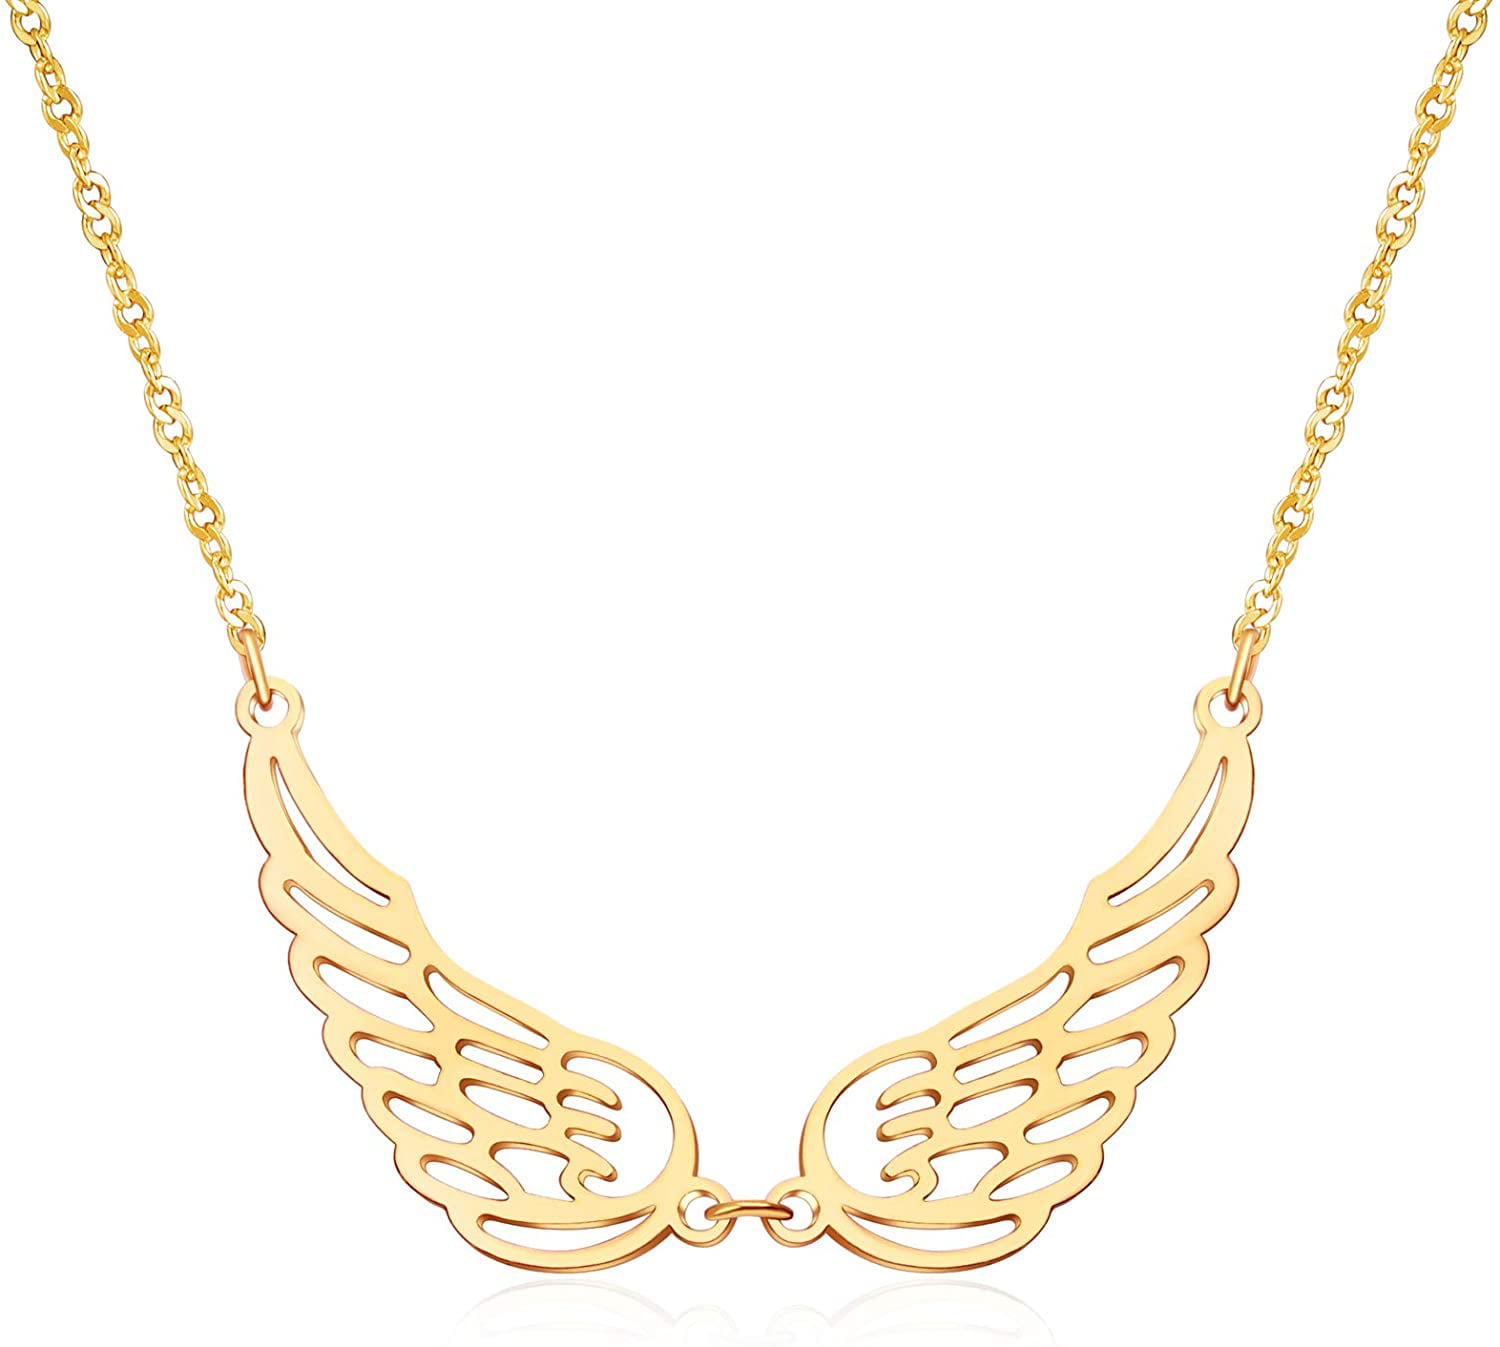 Wiskunde native bijkeuken Angel Wings Necklace Choker Necklace Simple Stainless Steel Pendant Gold  Tone Guardian Angel Wings Jewelry For Woman Girls Necklace - Walmart.com